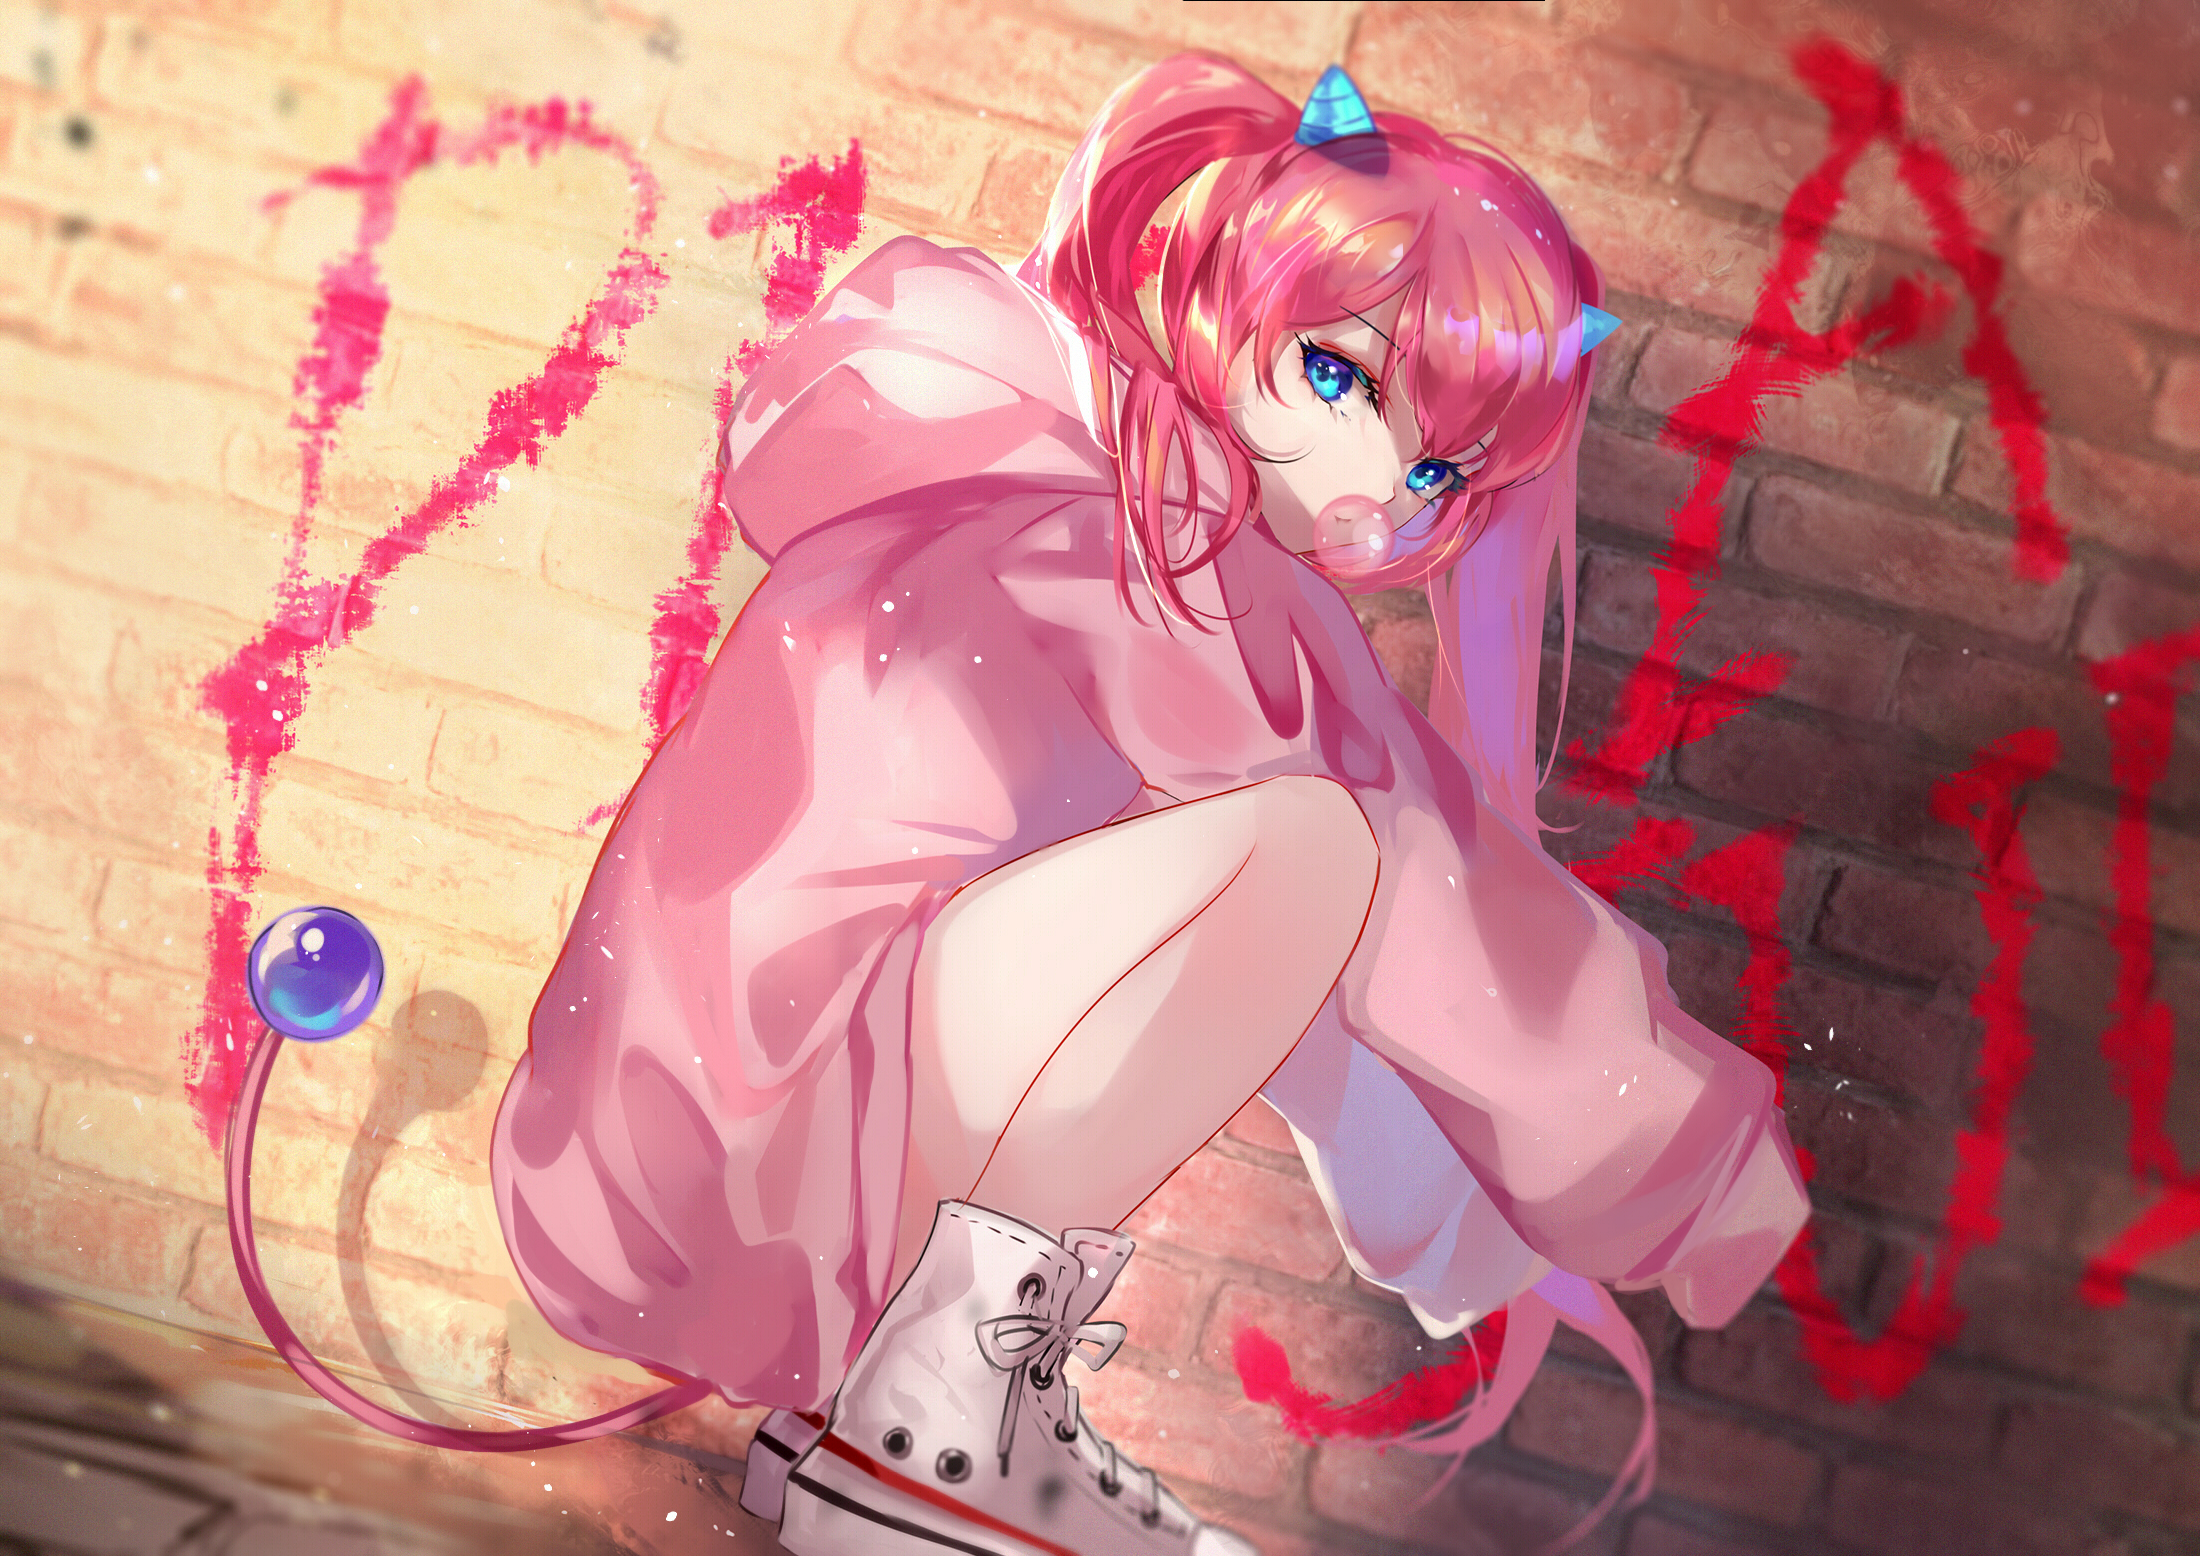 Anime 2200x1556 anime anime girls digital art artwork portrait squatting graffiti bubble gum side view looking at viewer horns tail redhead blue eyes Vardan sneakers pink hair